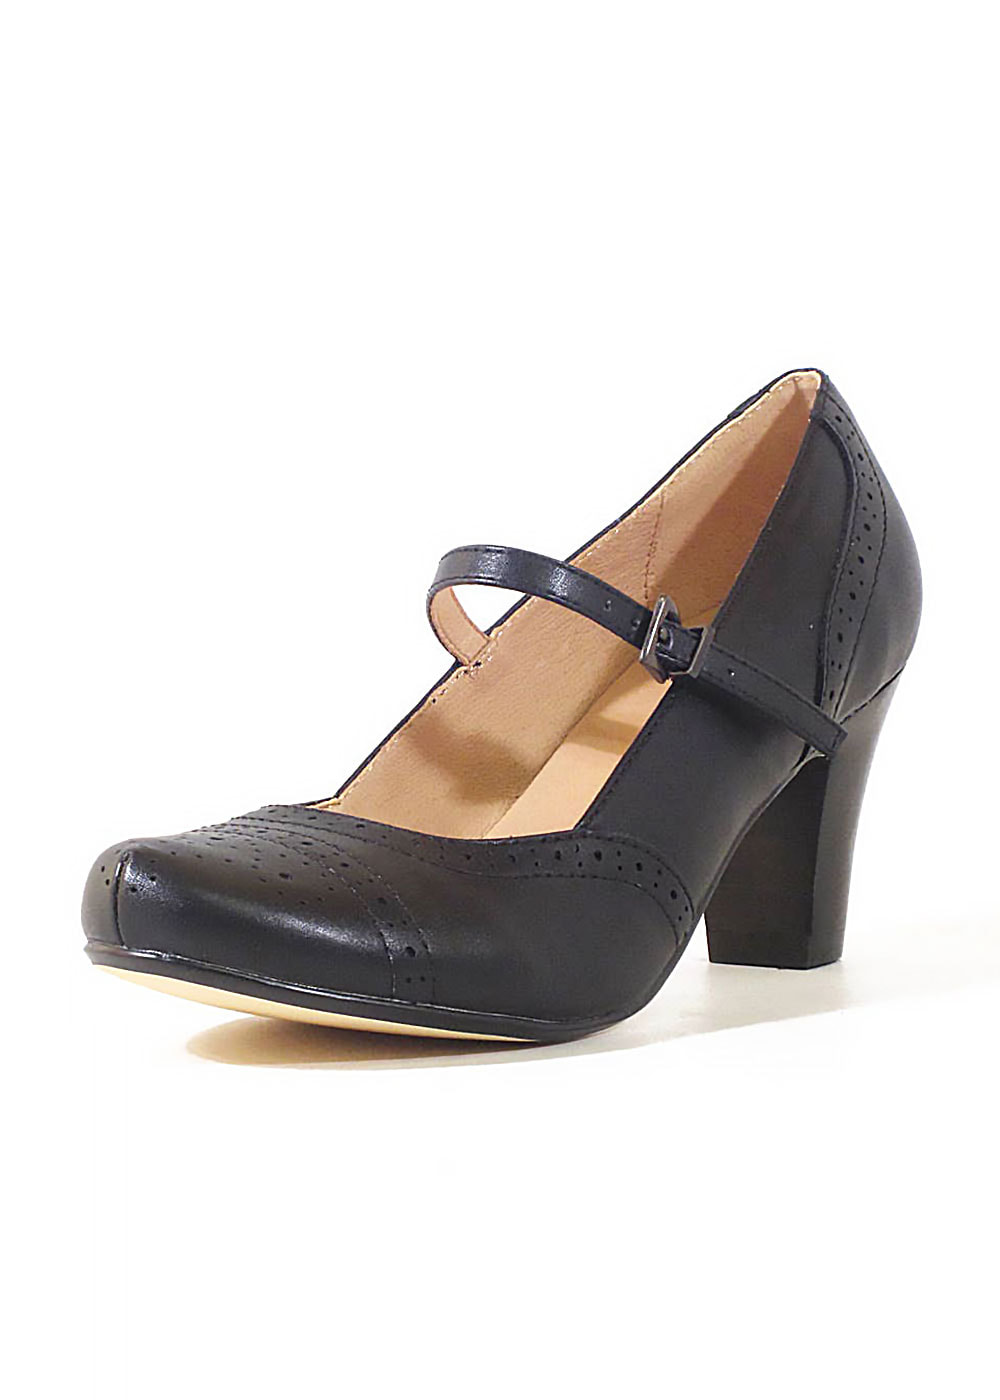 New Ladies Womens Chunky Mid High Block Heel T-Bar Platform Mary Jane Shoes  Size | eBay